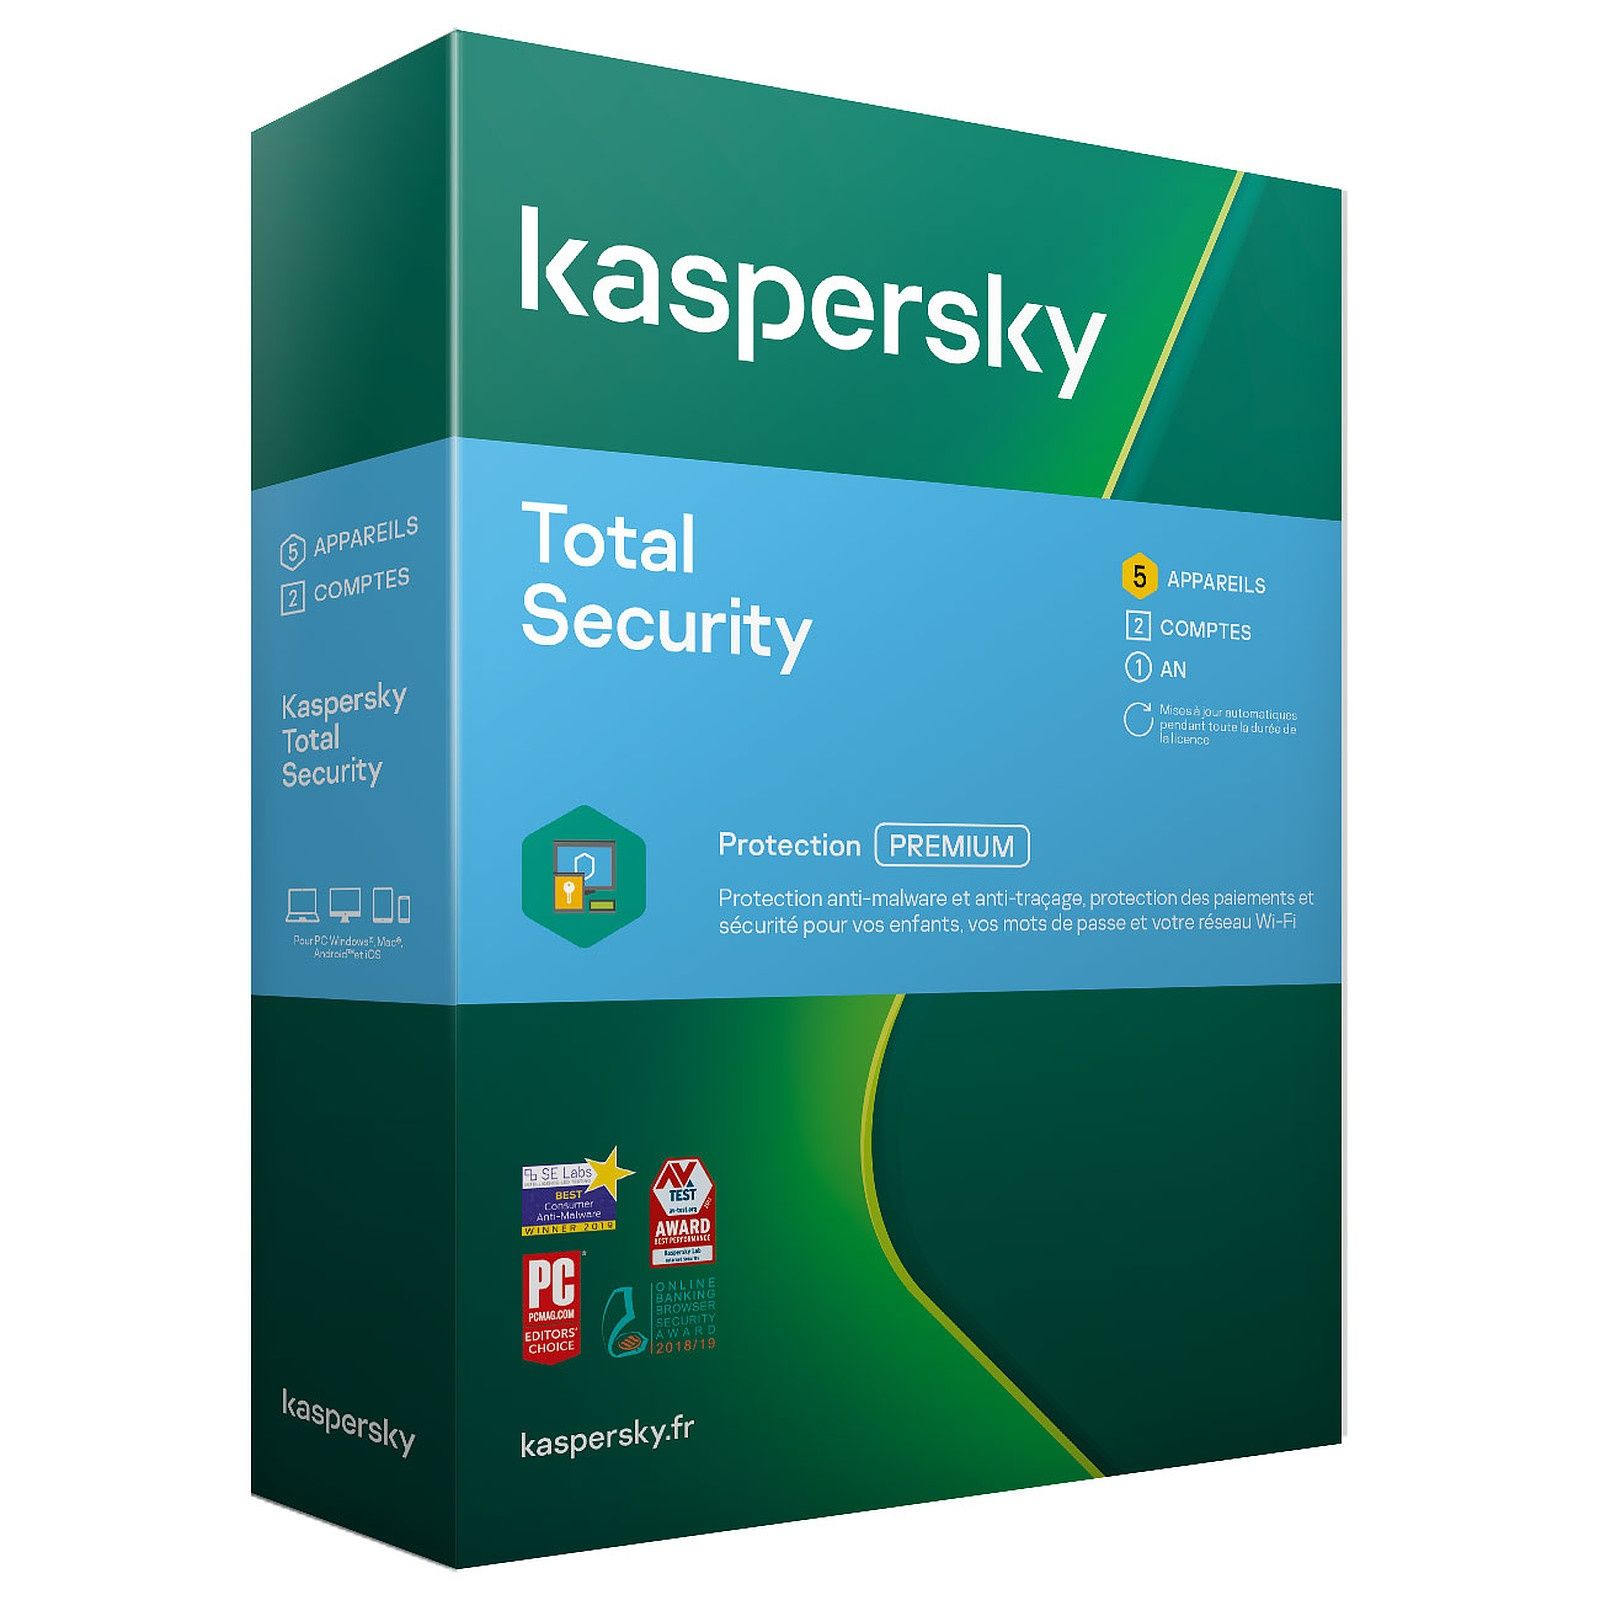 Kaspersky Internet Security/ Kaspersky Anti-Virus/ Лицензионный